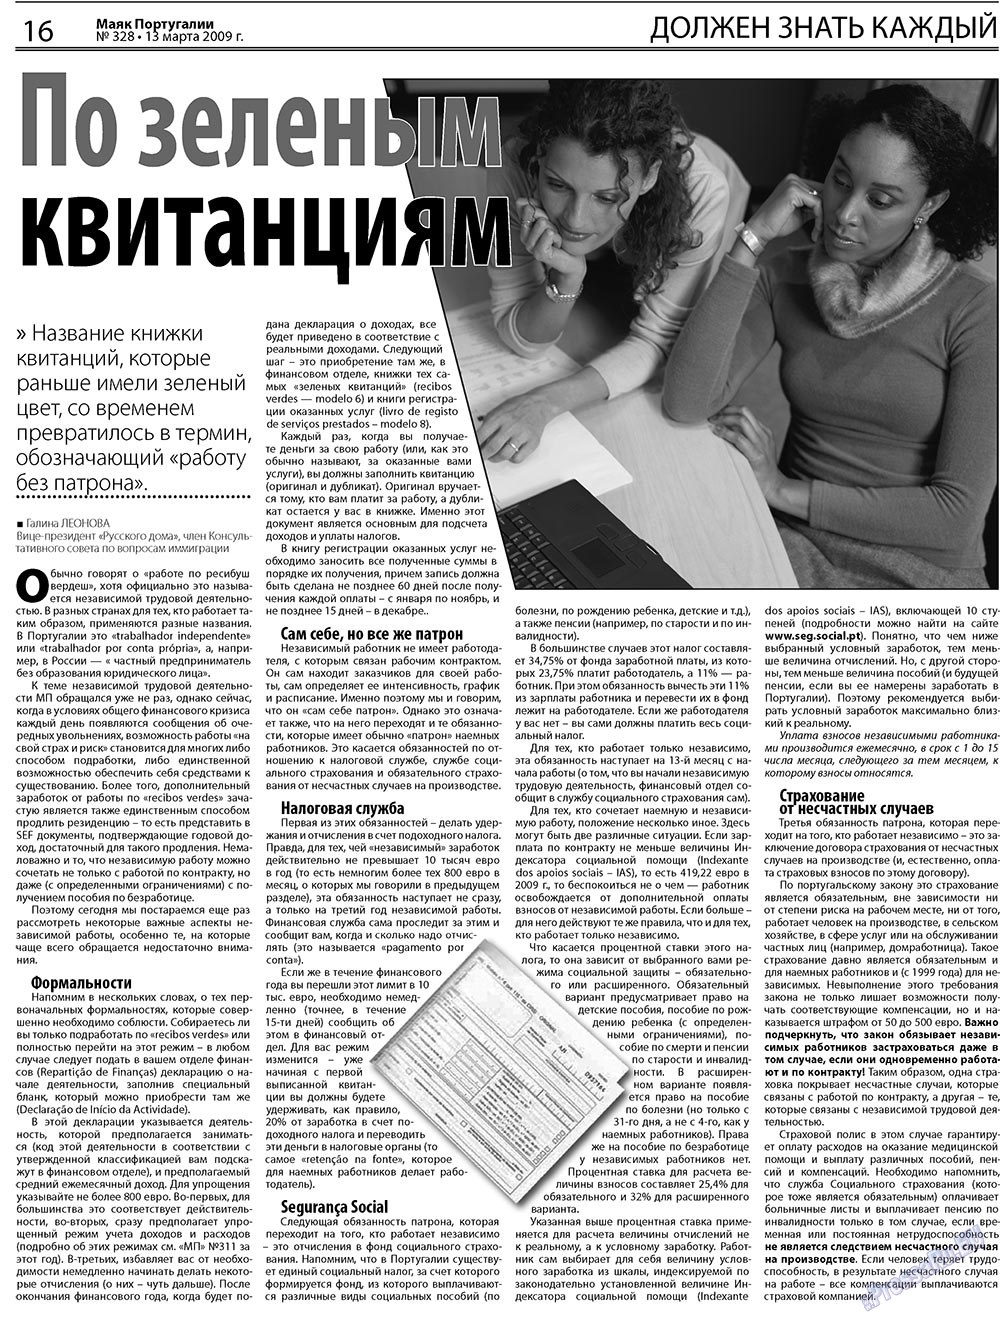 Маяк Португалии, газета. 2009 №11 стр.16